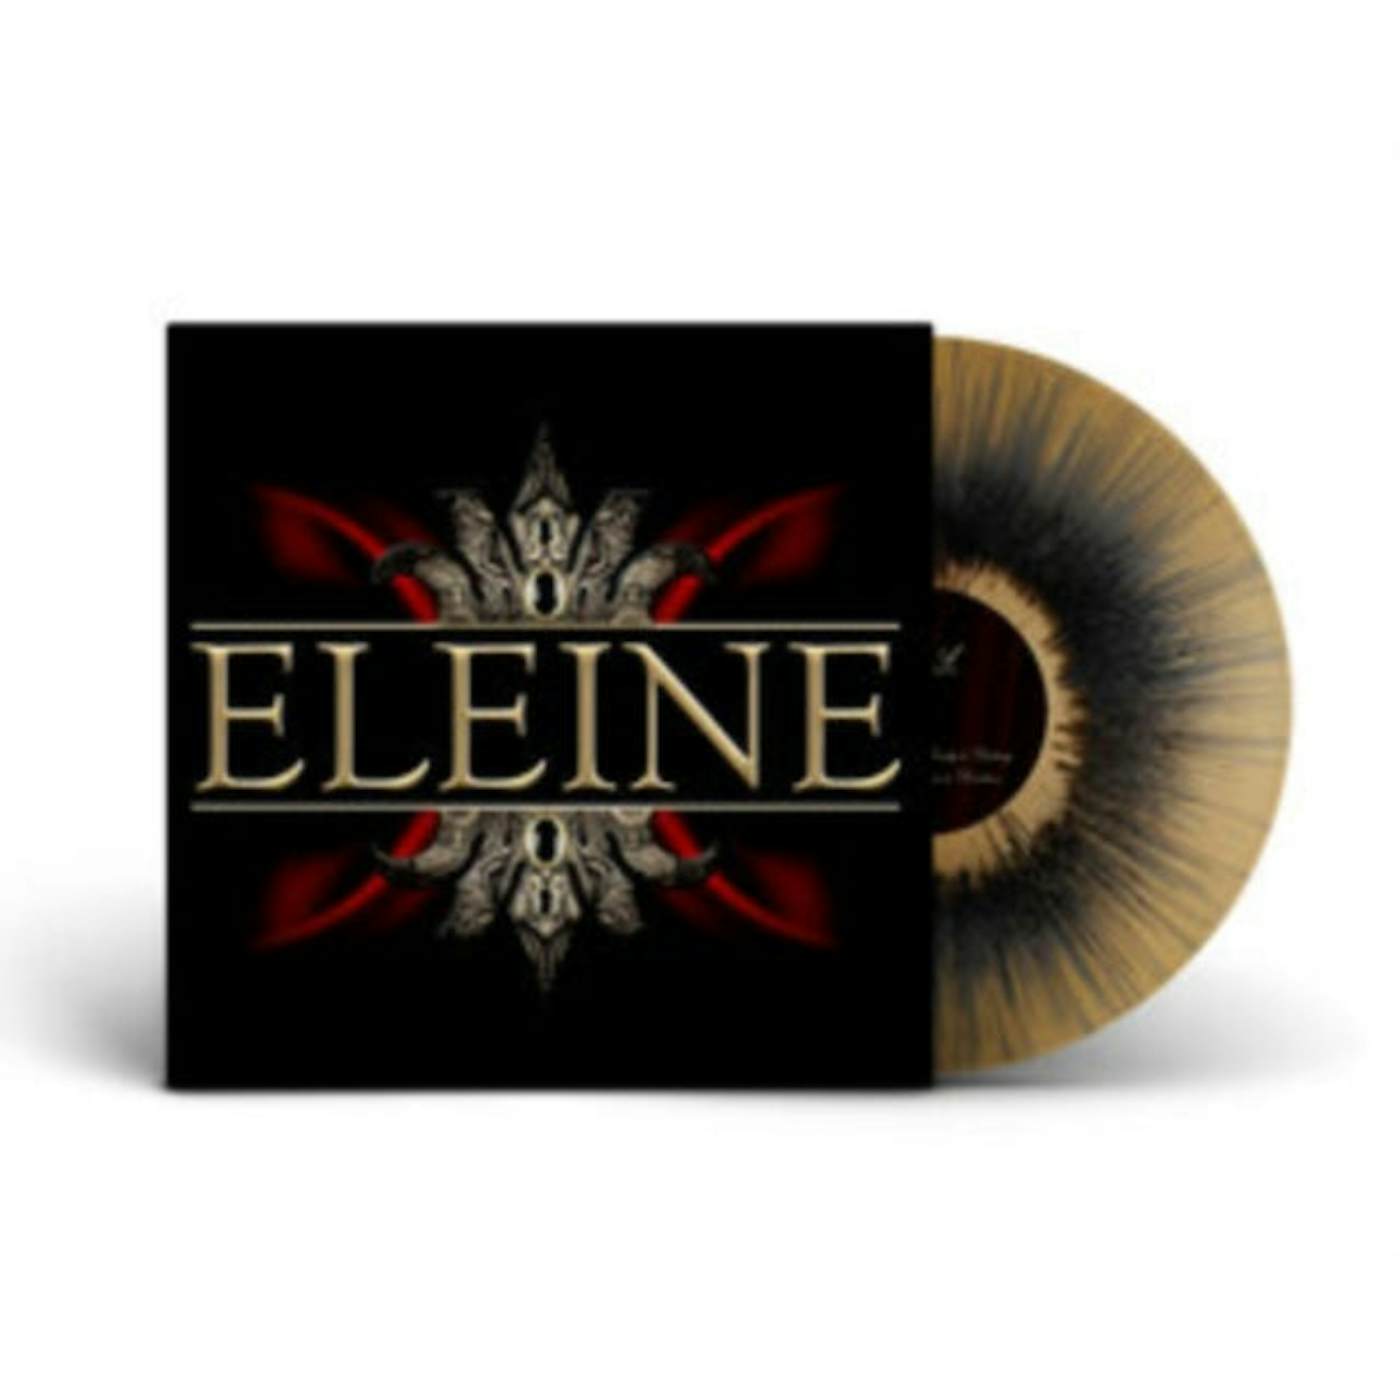  Eleine S/T (Gold / Black Splatter) Vinyl Record